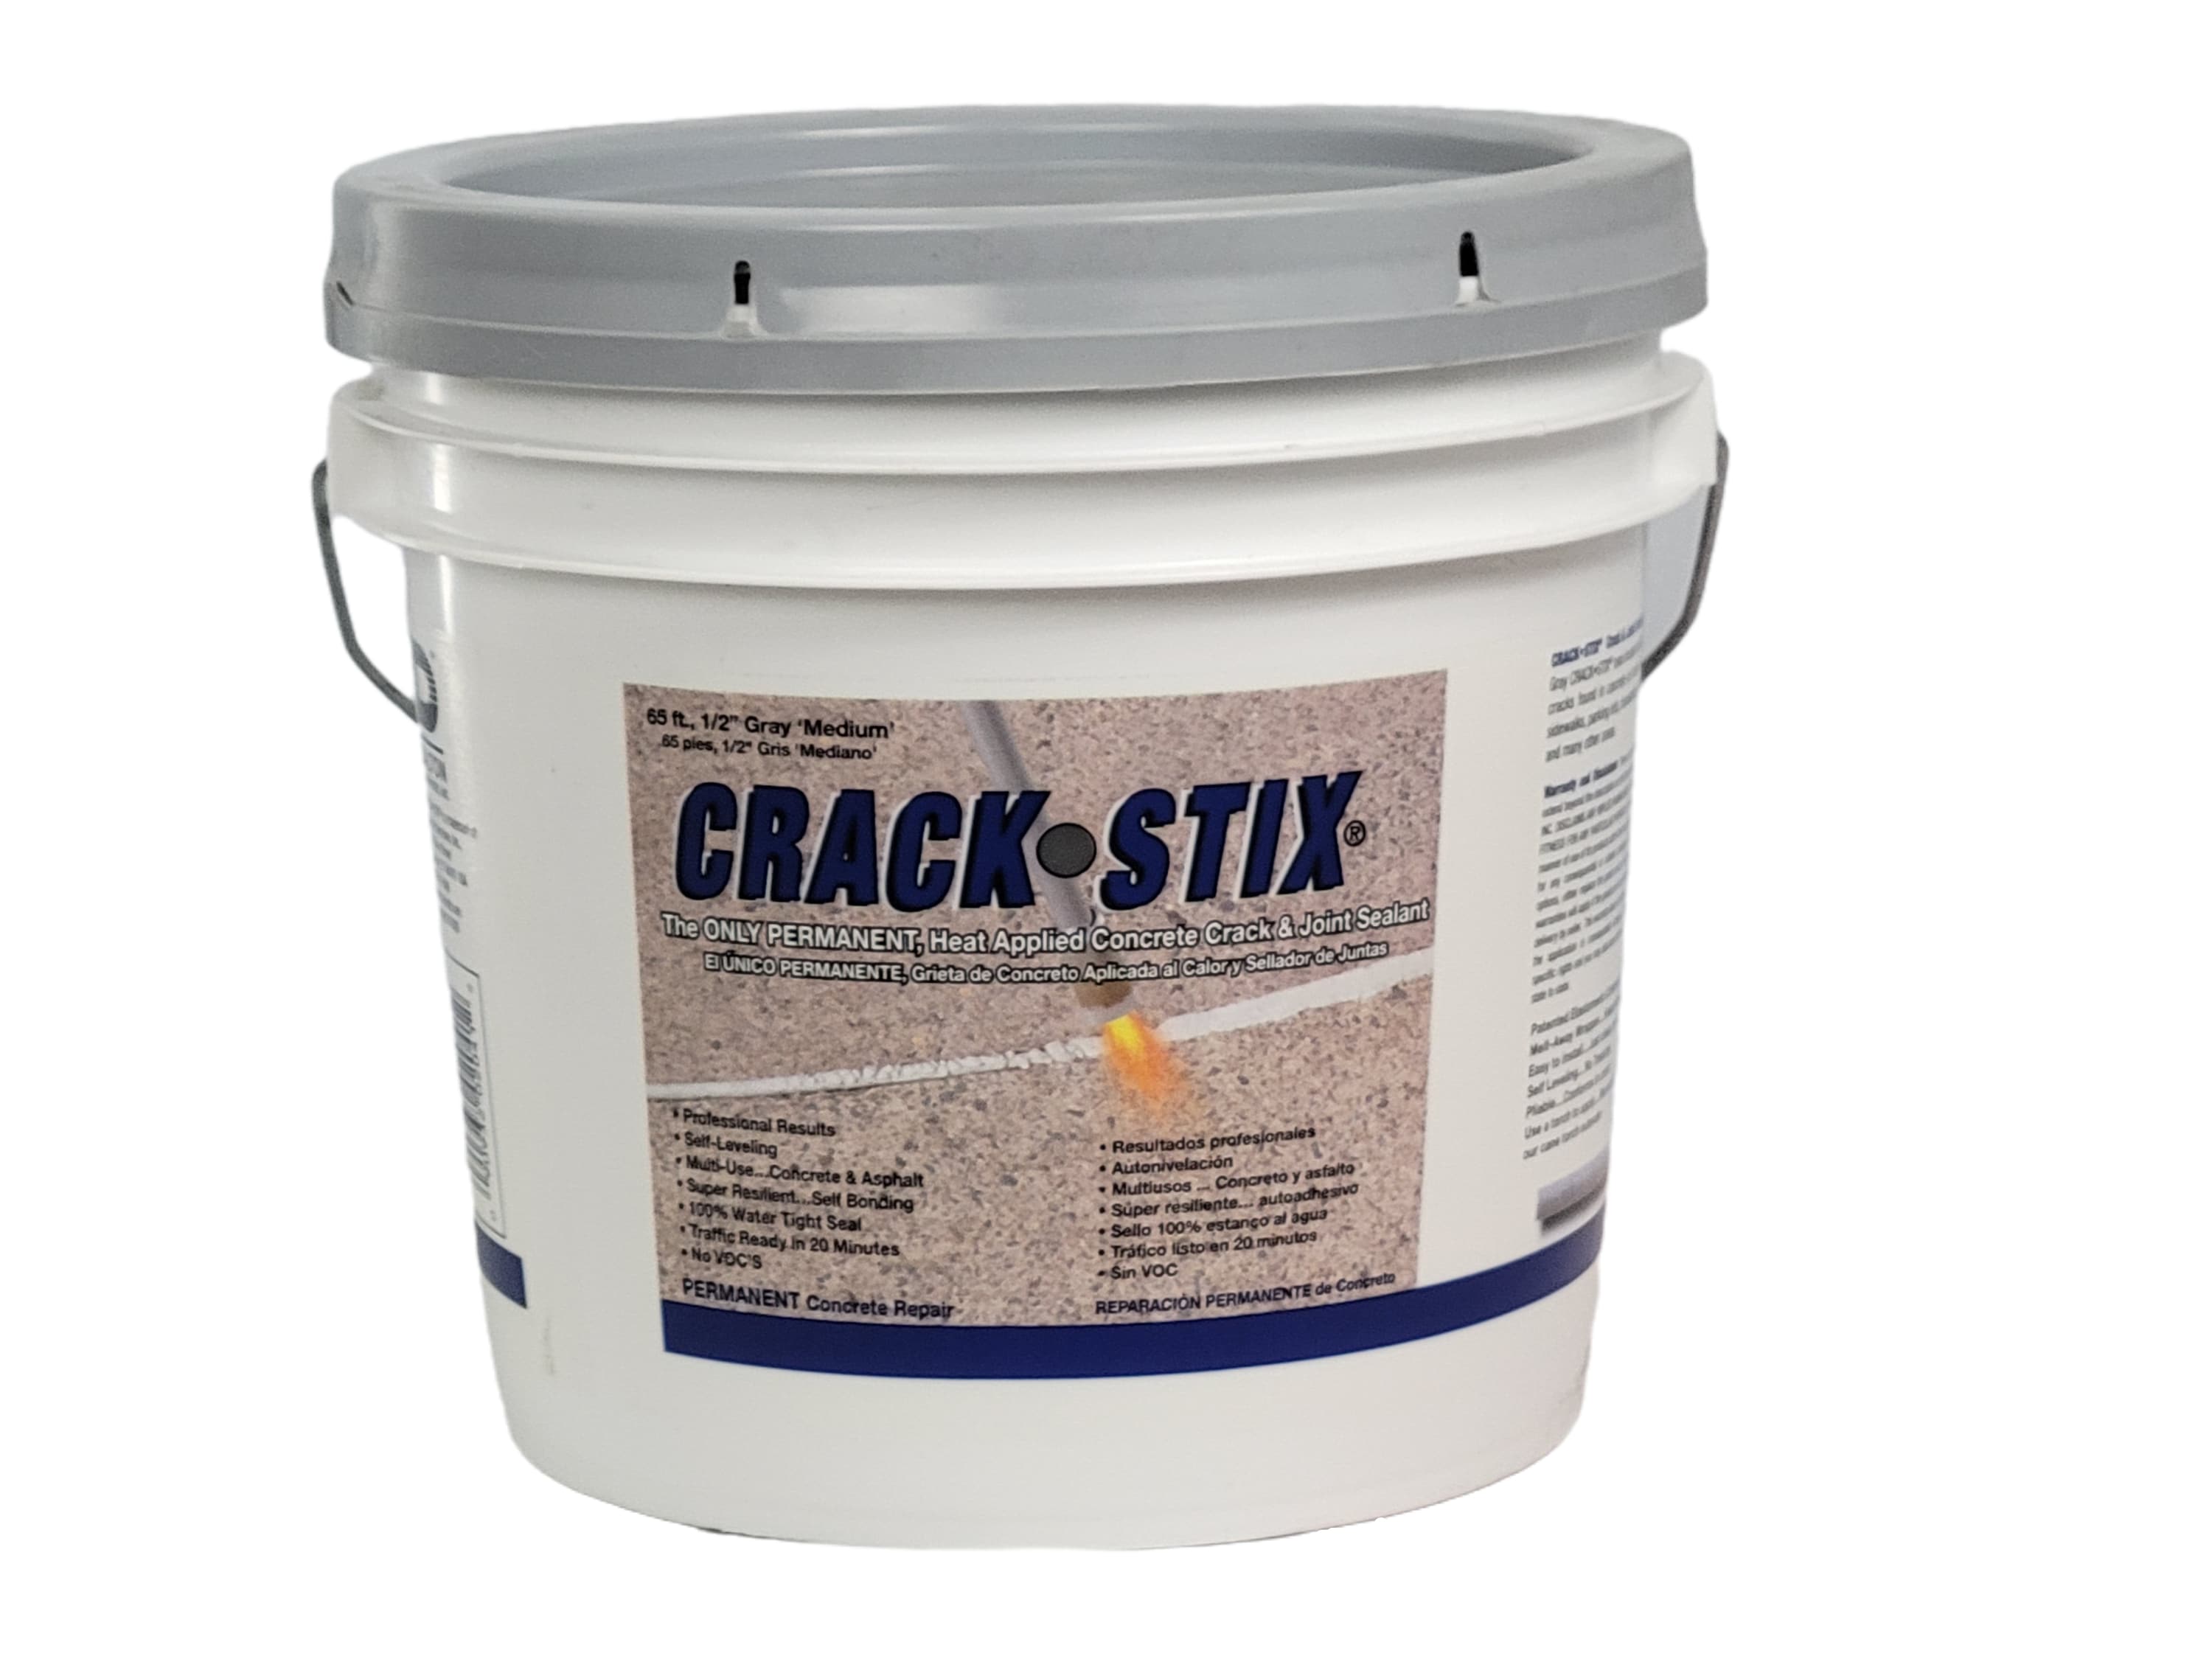 Crack-Stix Concrete & Mortar Repair at Lowes.com